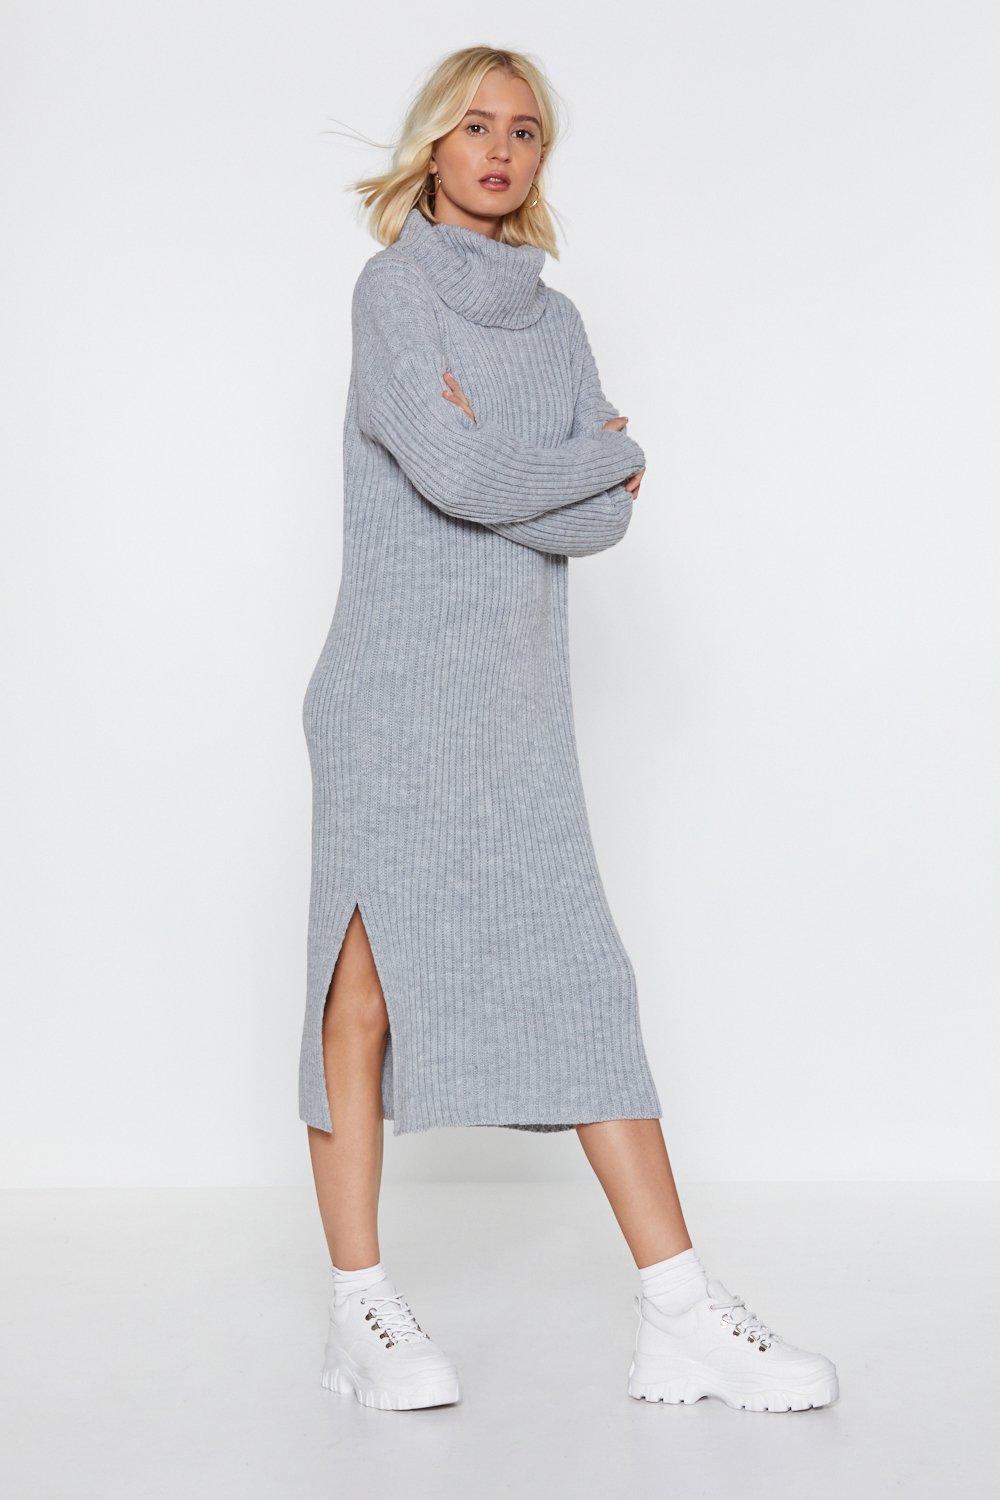 grey turtleneck sweater dress